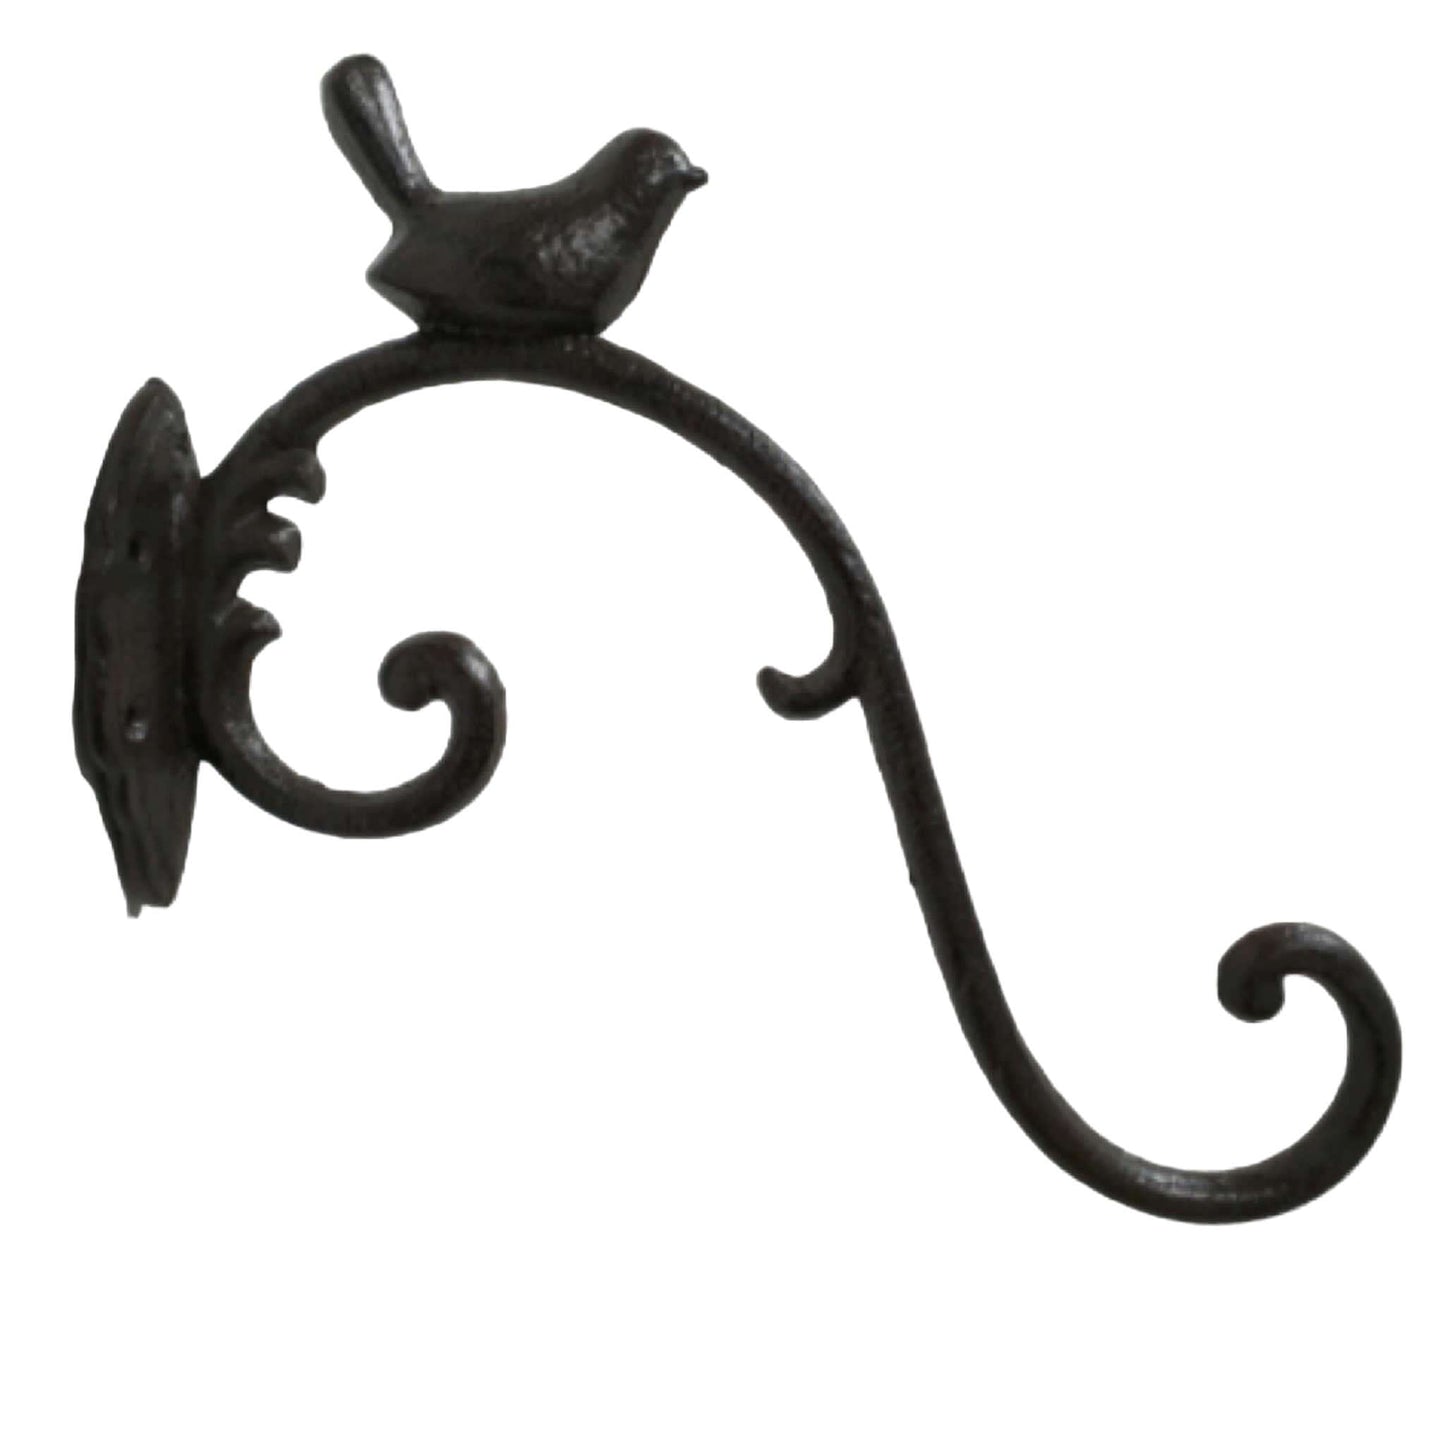 Bird Iron Hook Pot Hanging Bracket Hanger - The Renmy Store Homewares & Gifts 